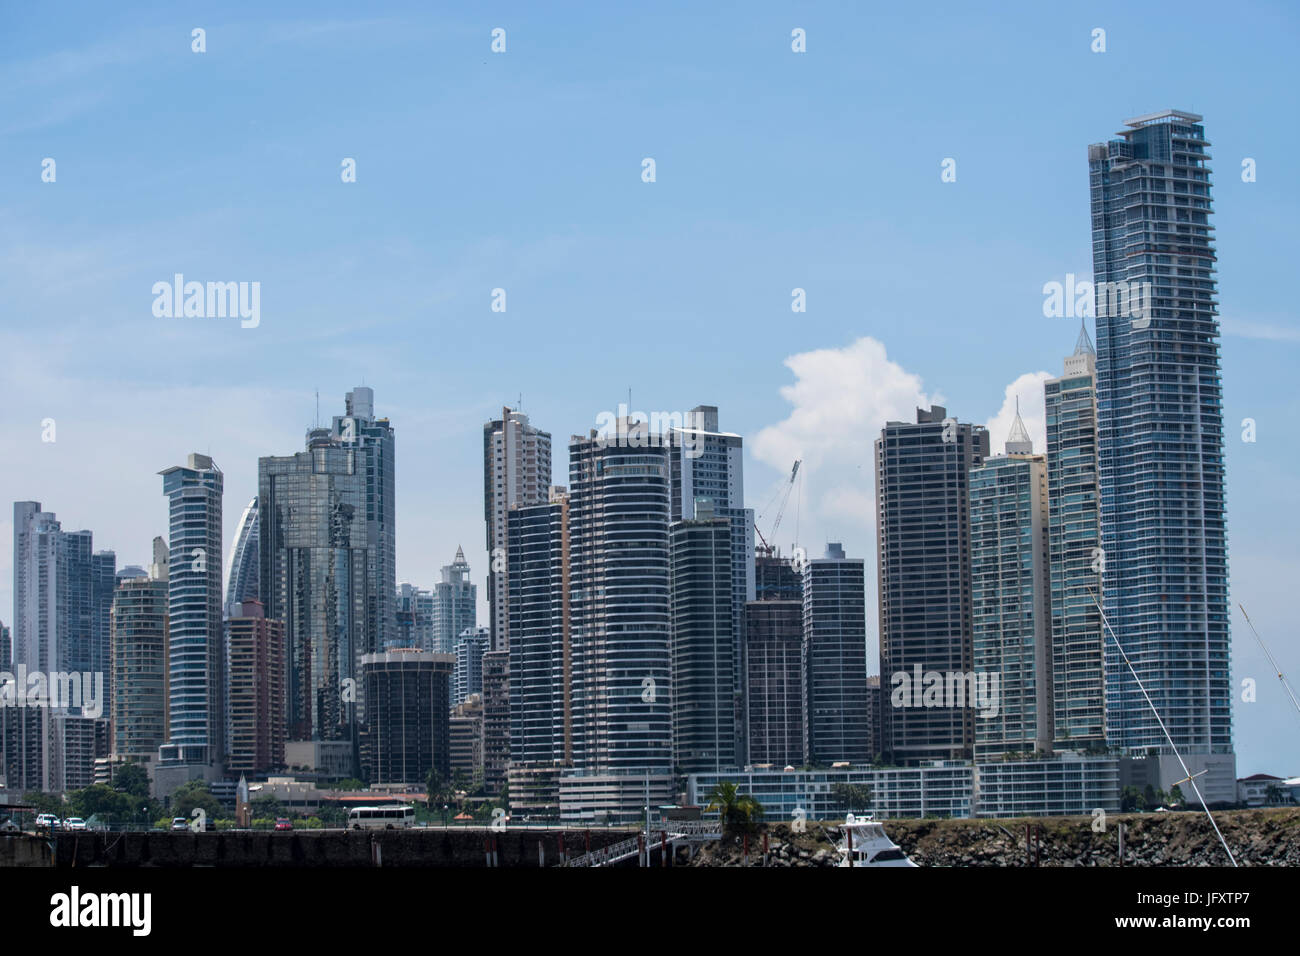 Paitilla apartment towers in Panama City Stock Photo